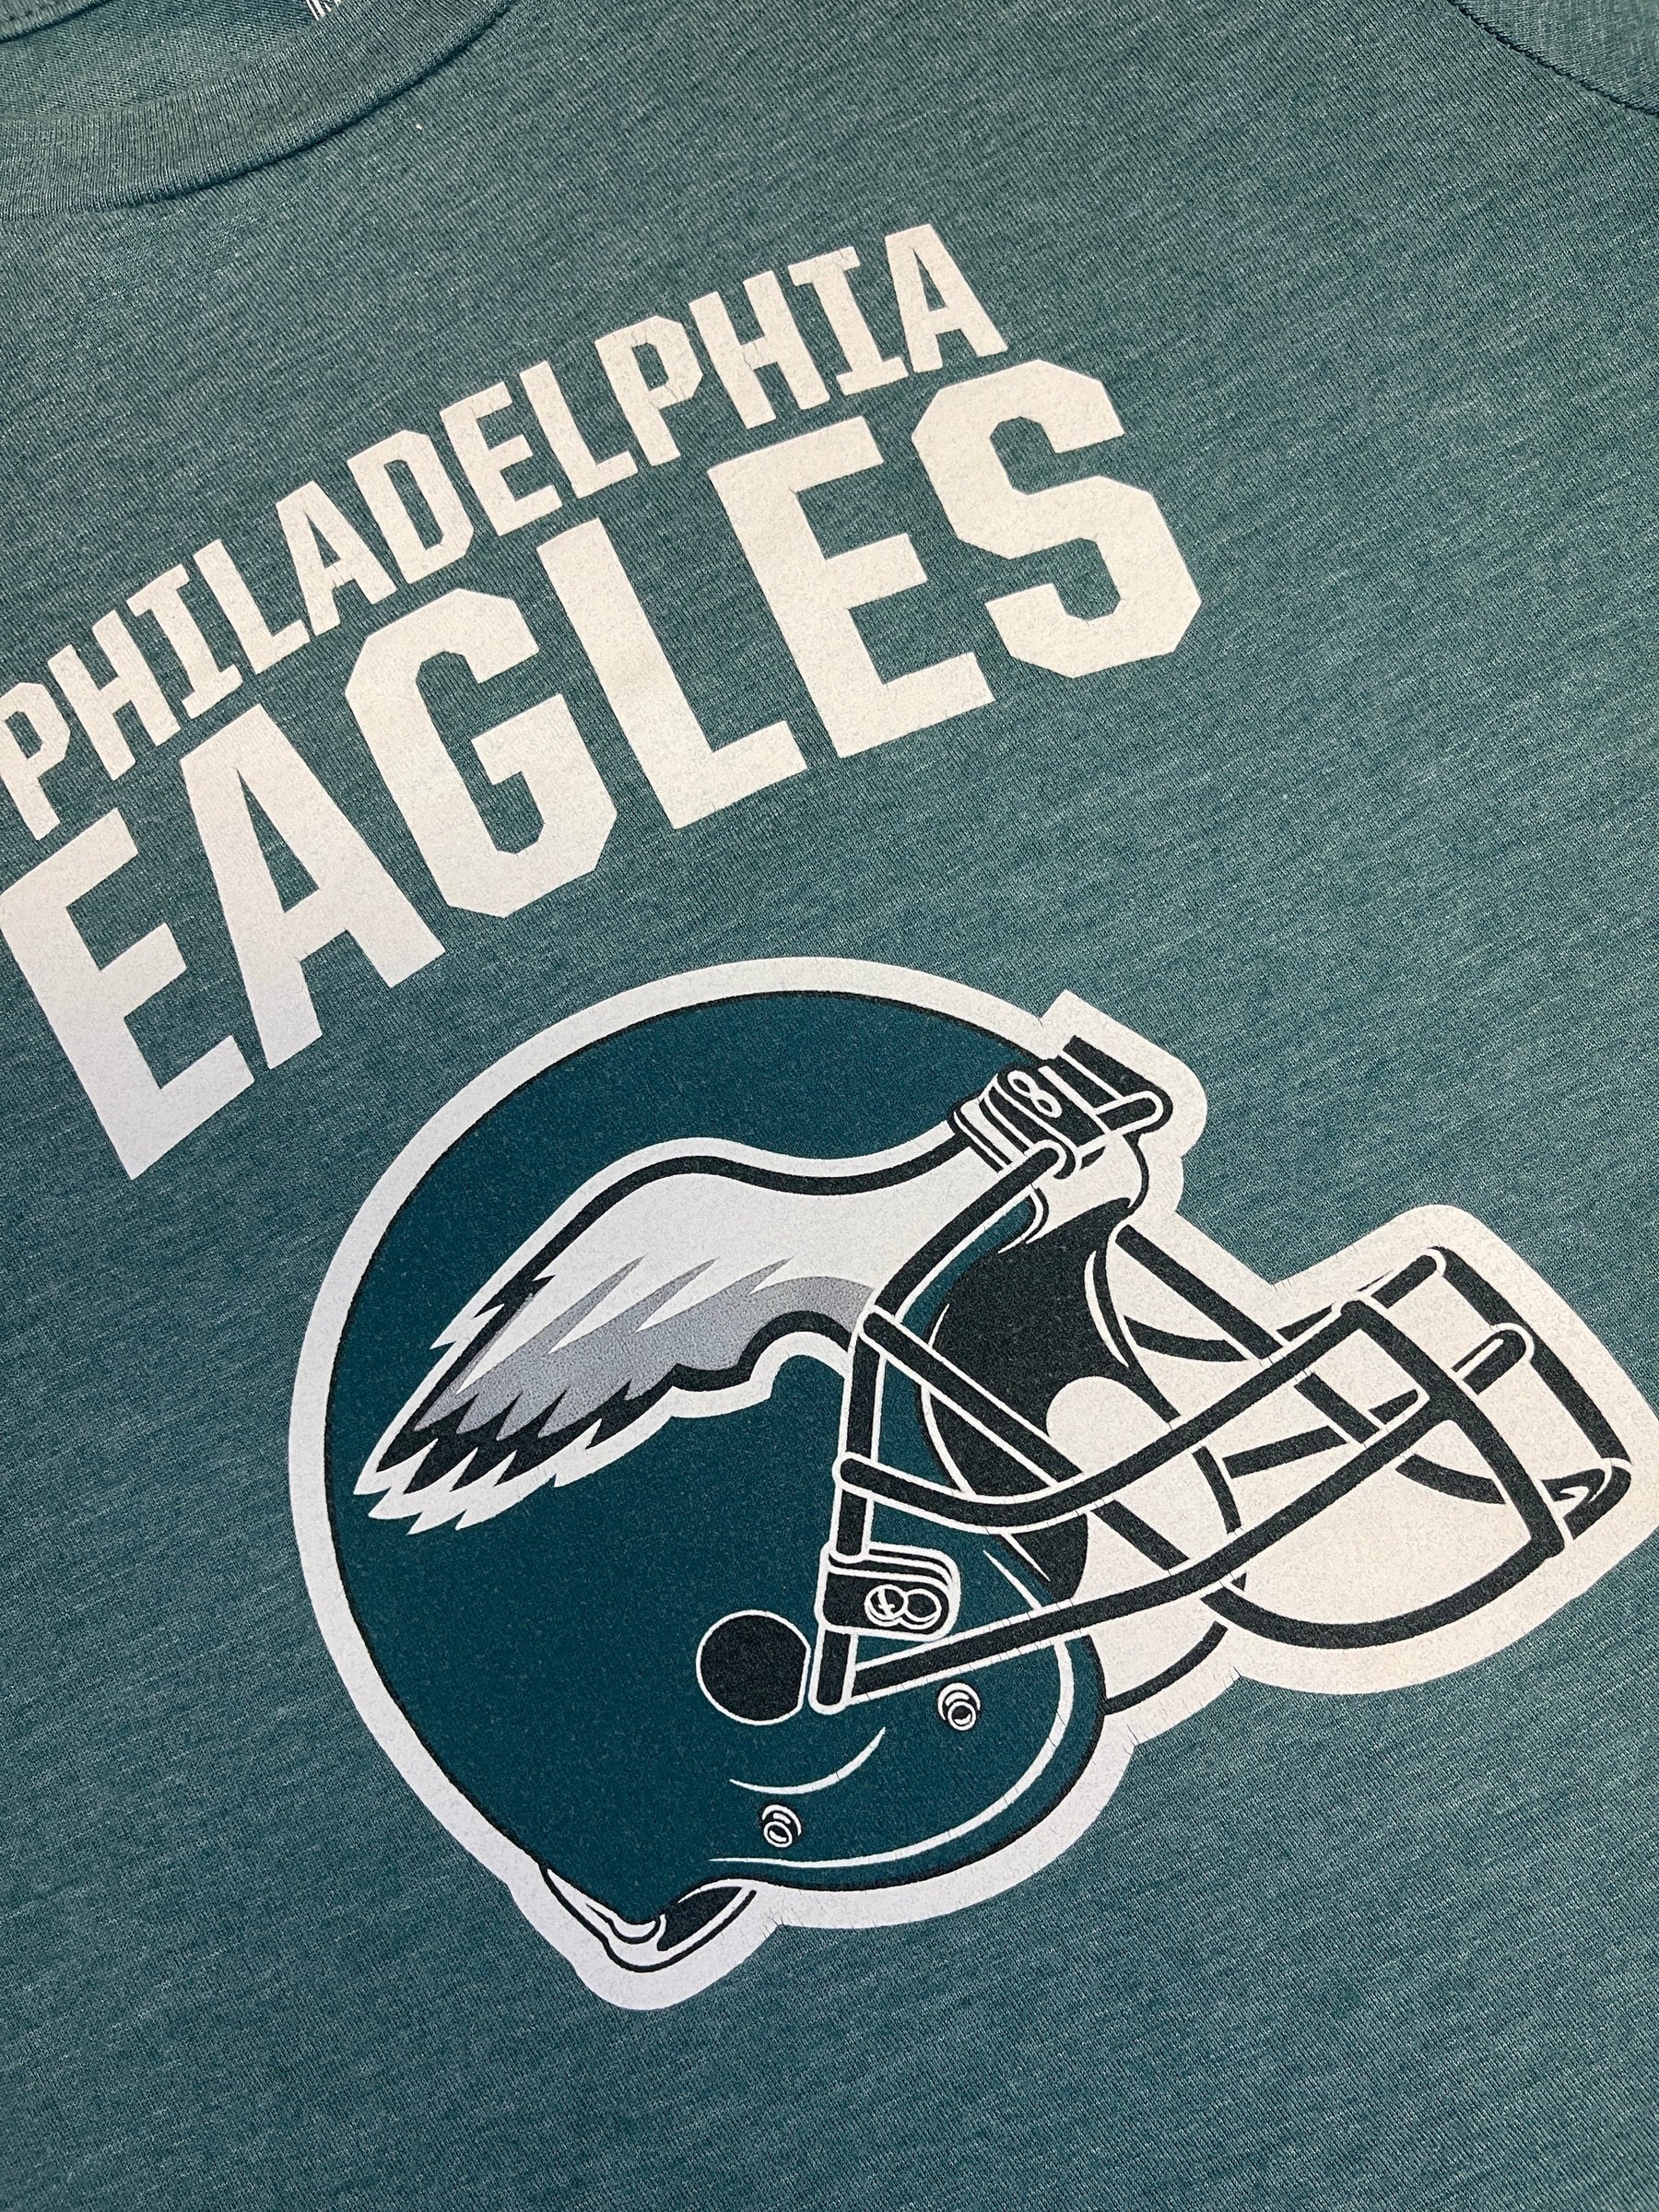 NFL Philadelphia Eagles Helmet T-Shirt Youth Small 6-7